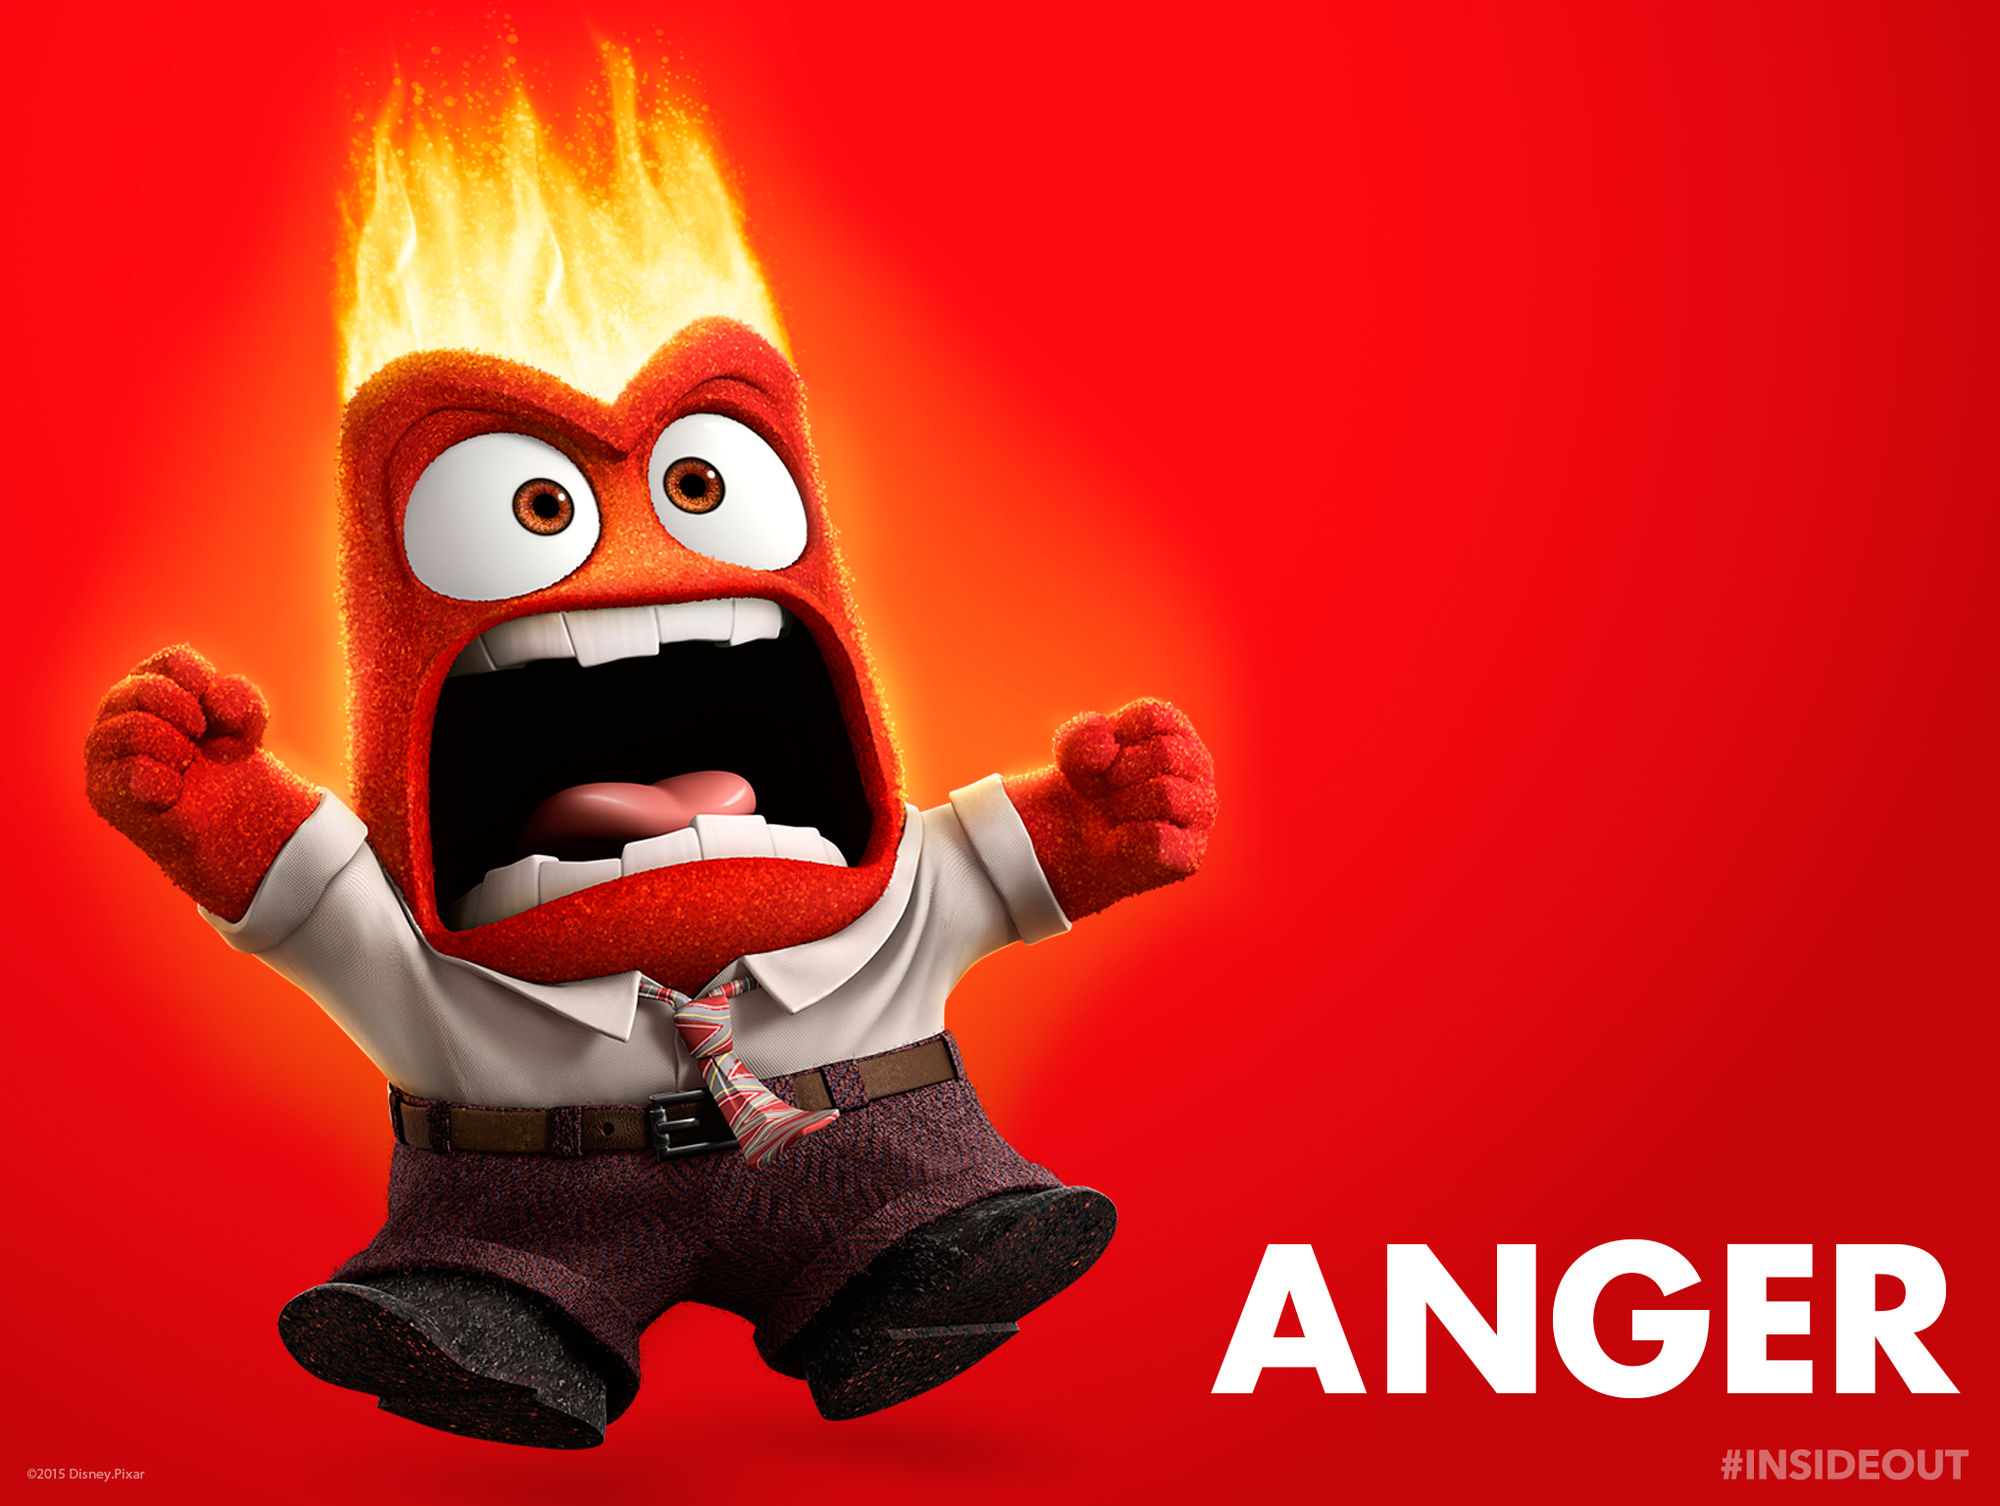 Managing Anger Effectively